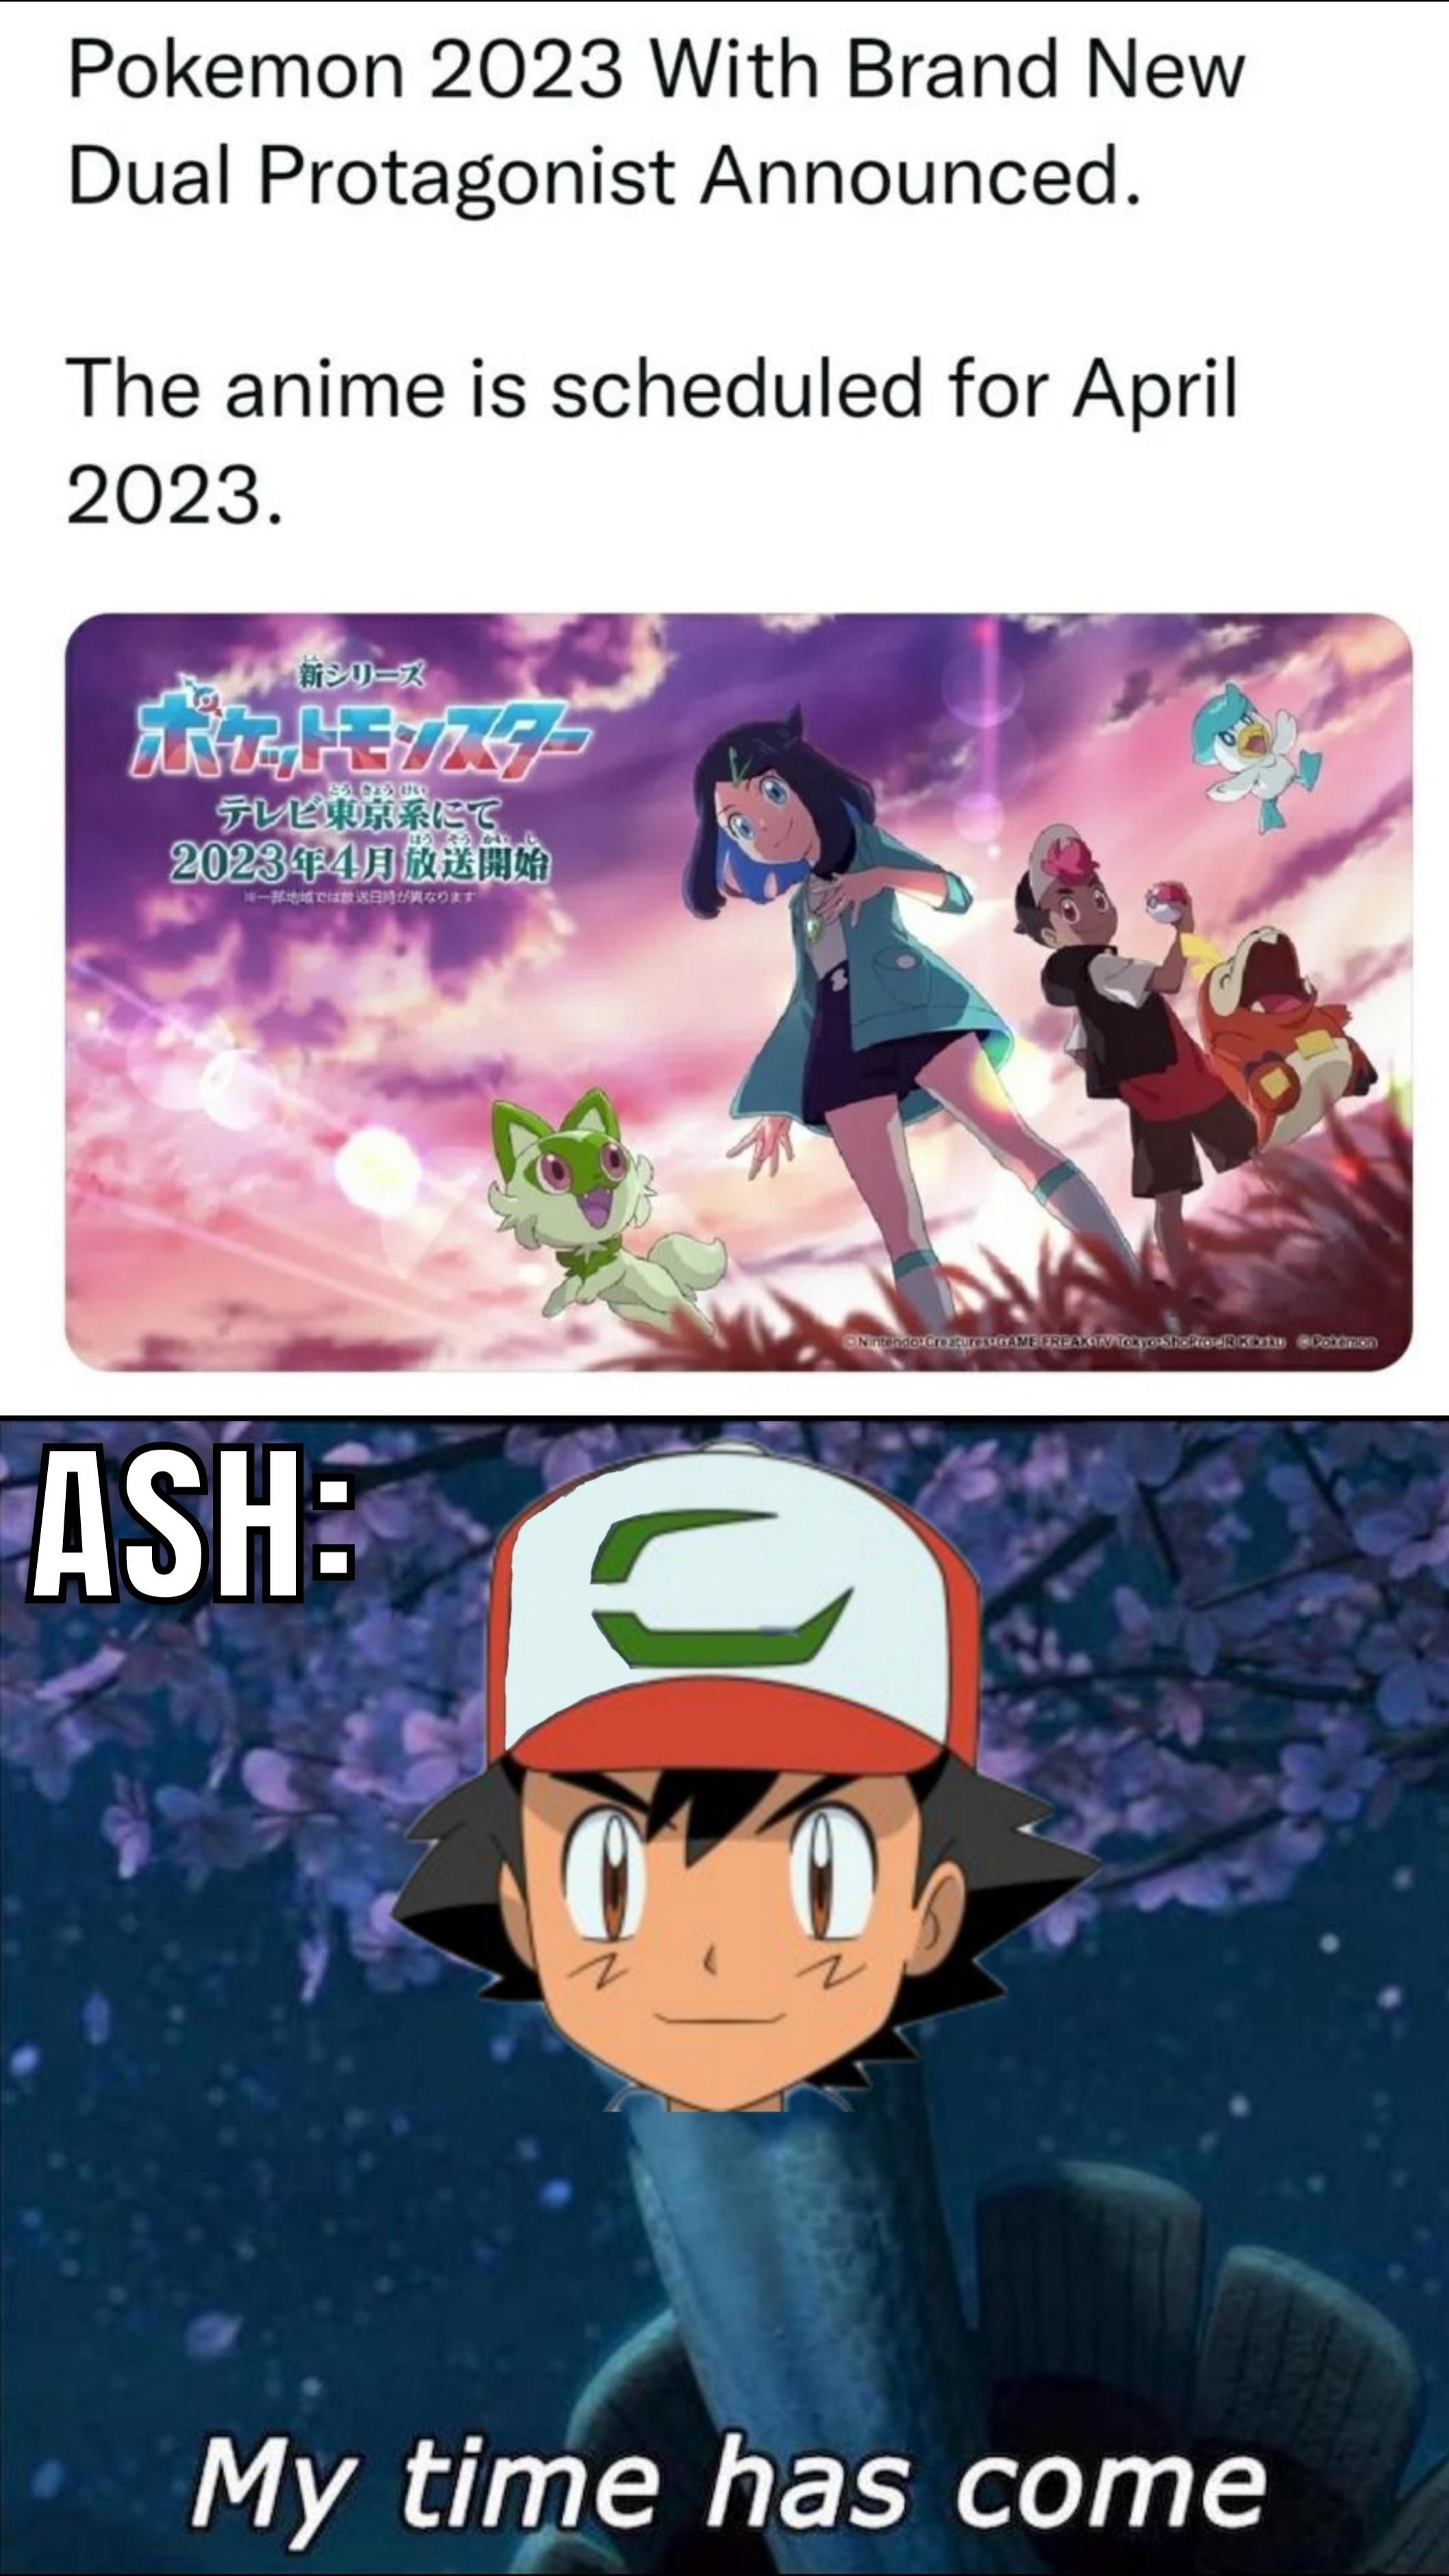 Finally Ash can retire